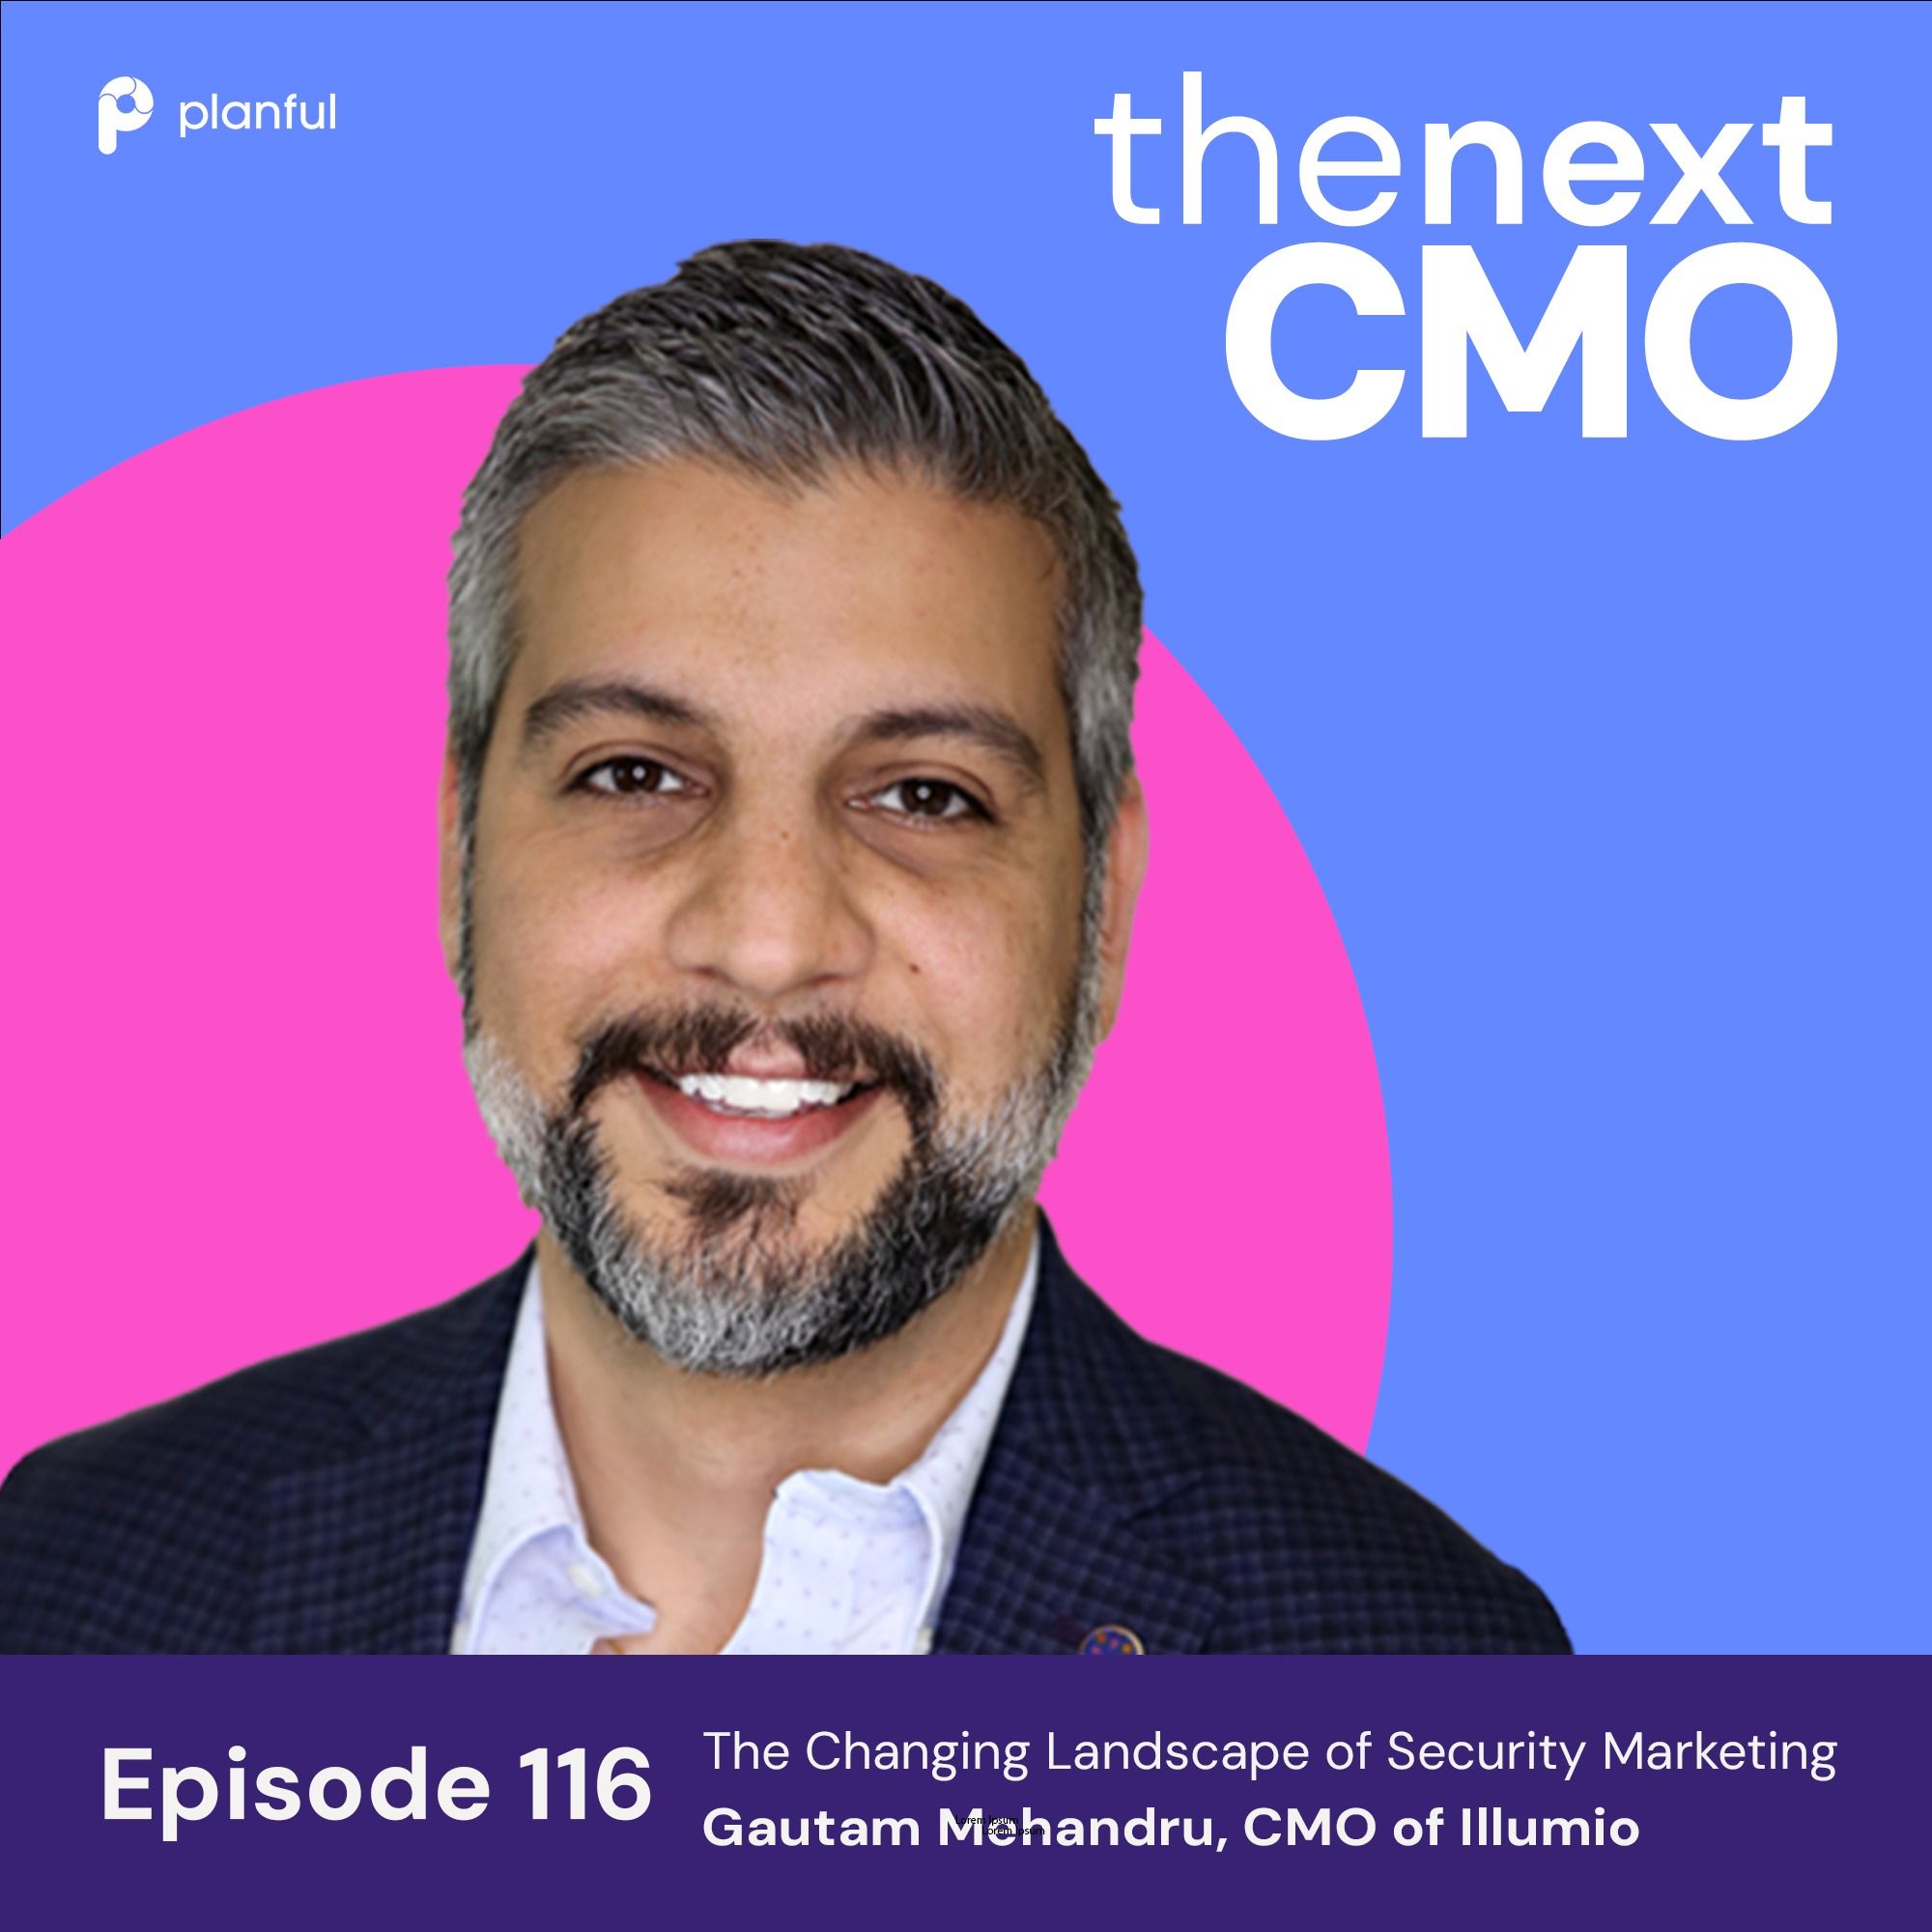 The Changing Landscape of Security Marketing with Gautam Mehandru, CMO of Illumio